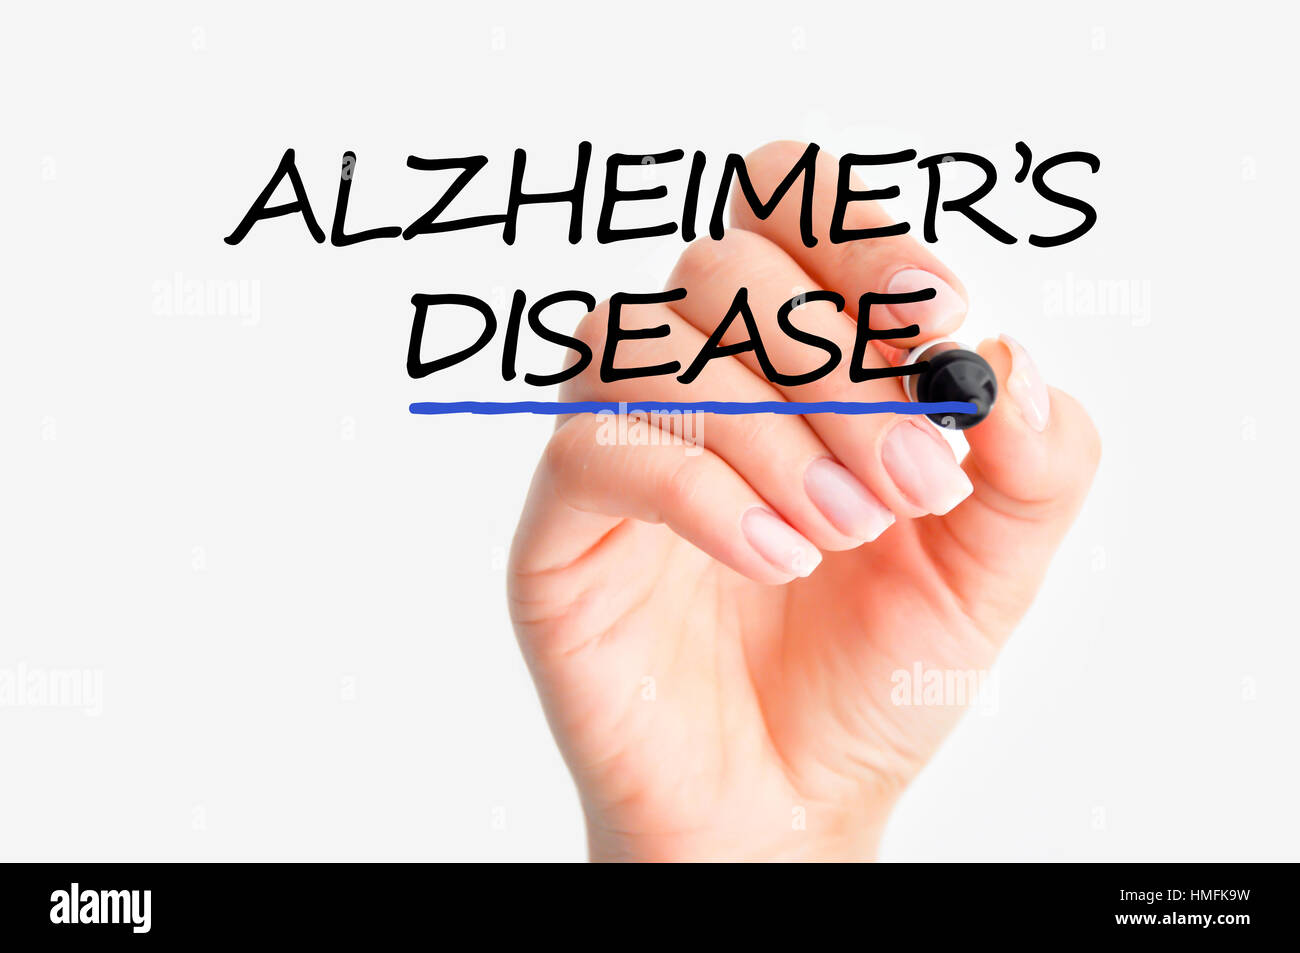 Woman hand writing Alzheimer’s disease on screen Stock Photo